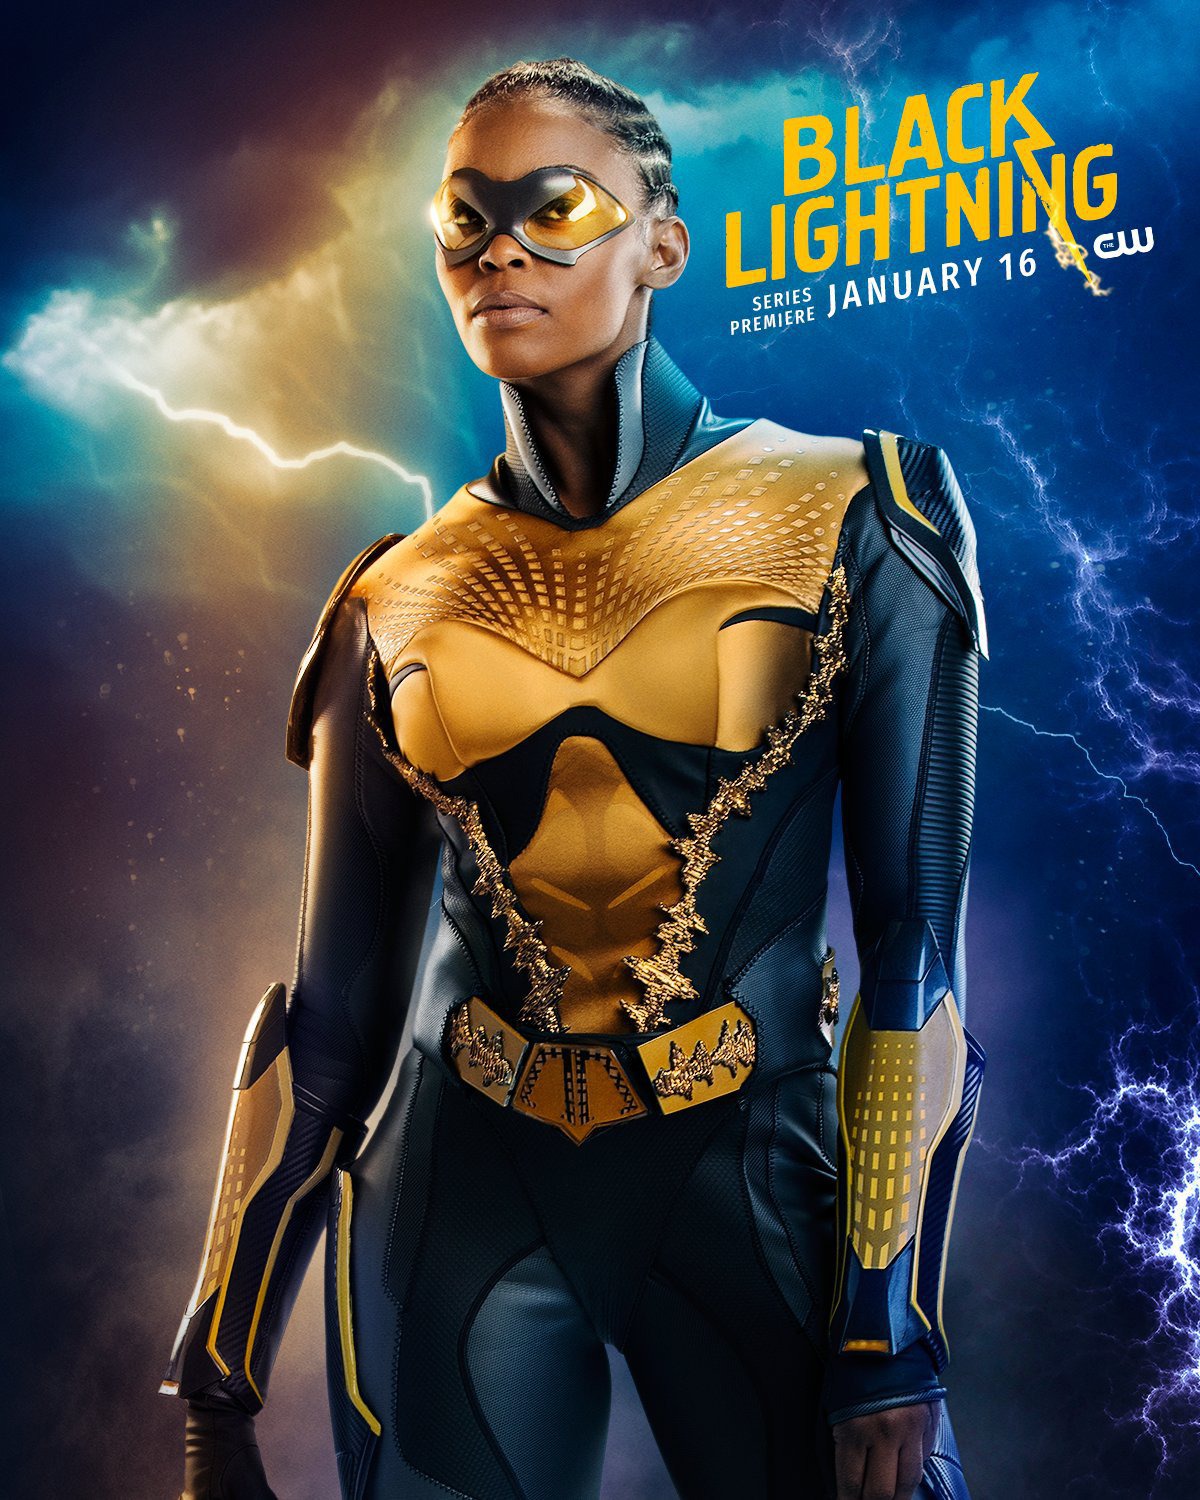 Extra Large TV Poster Image for Black Lightning (#2 of 14)